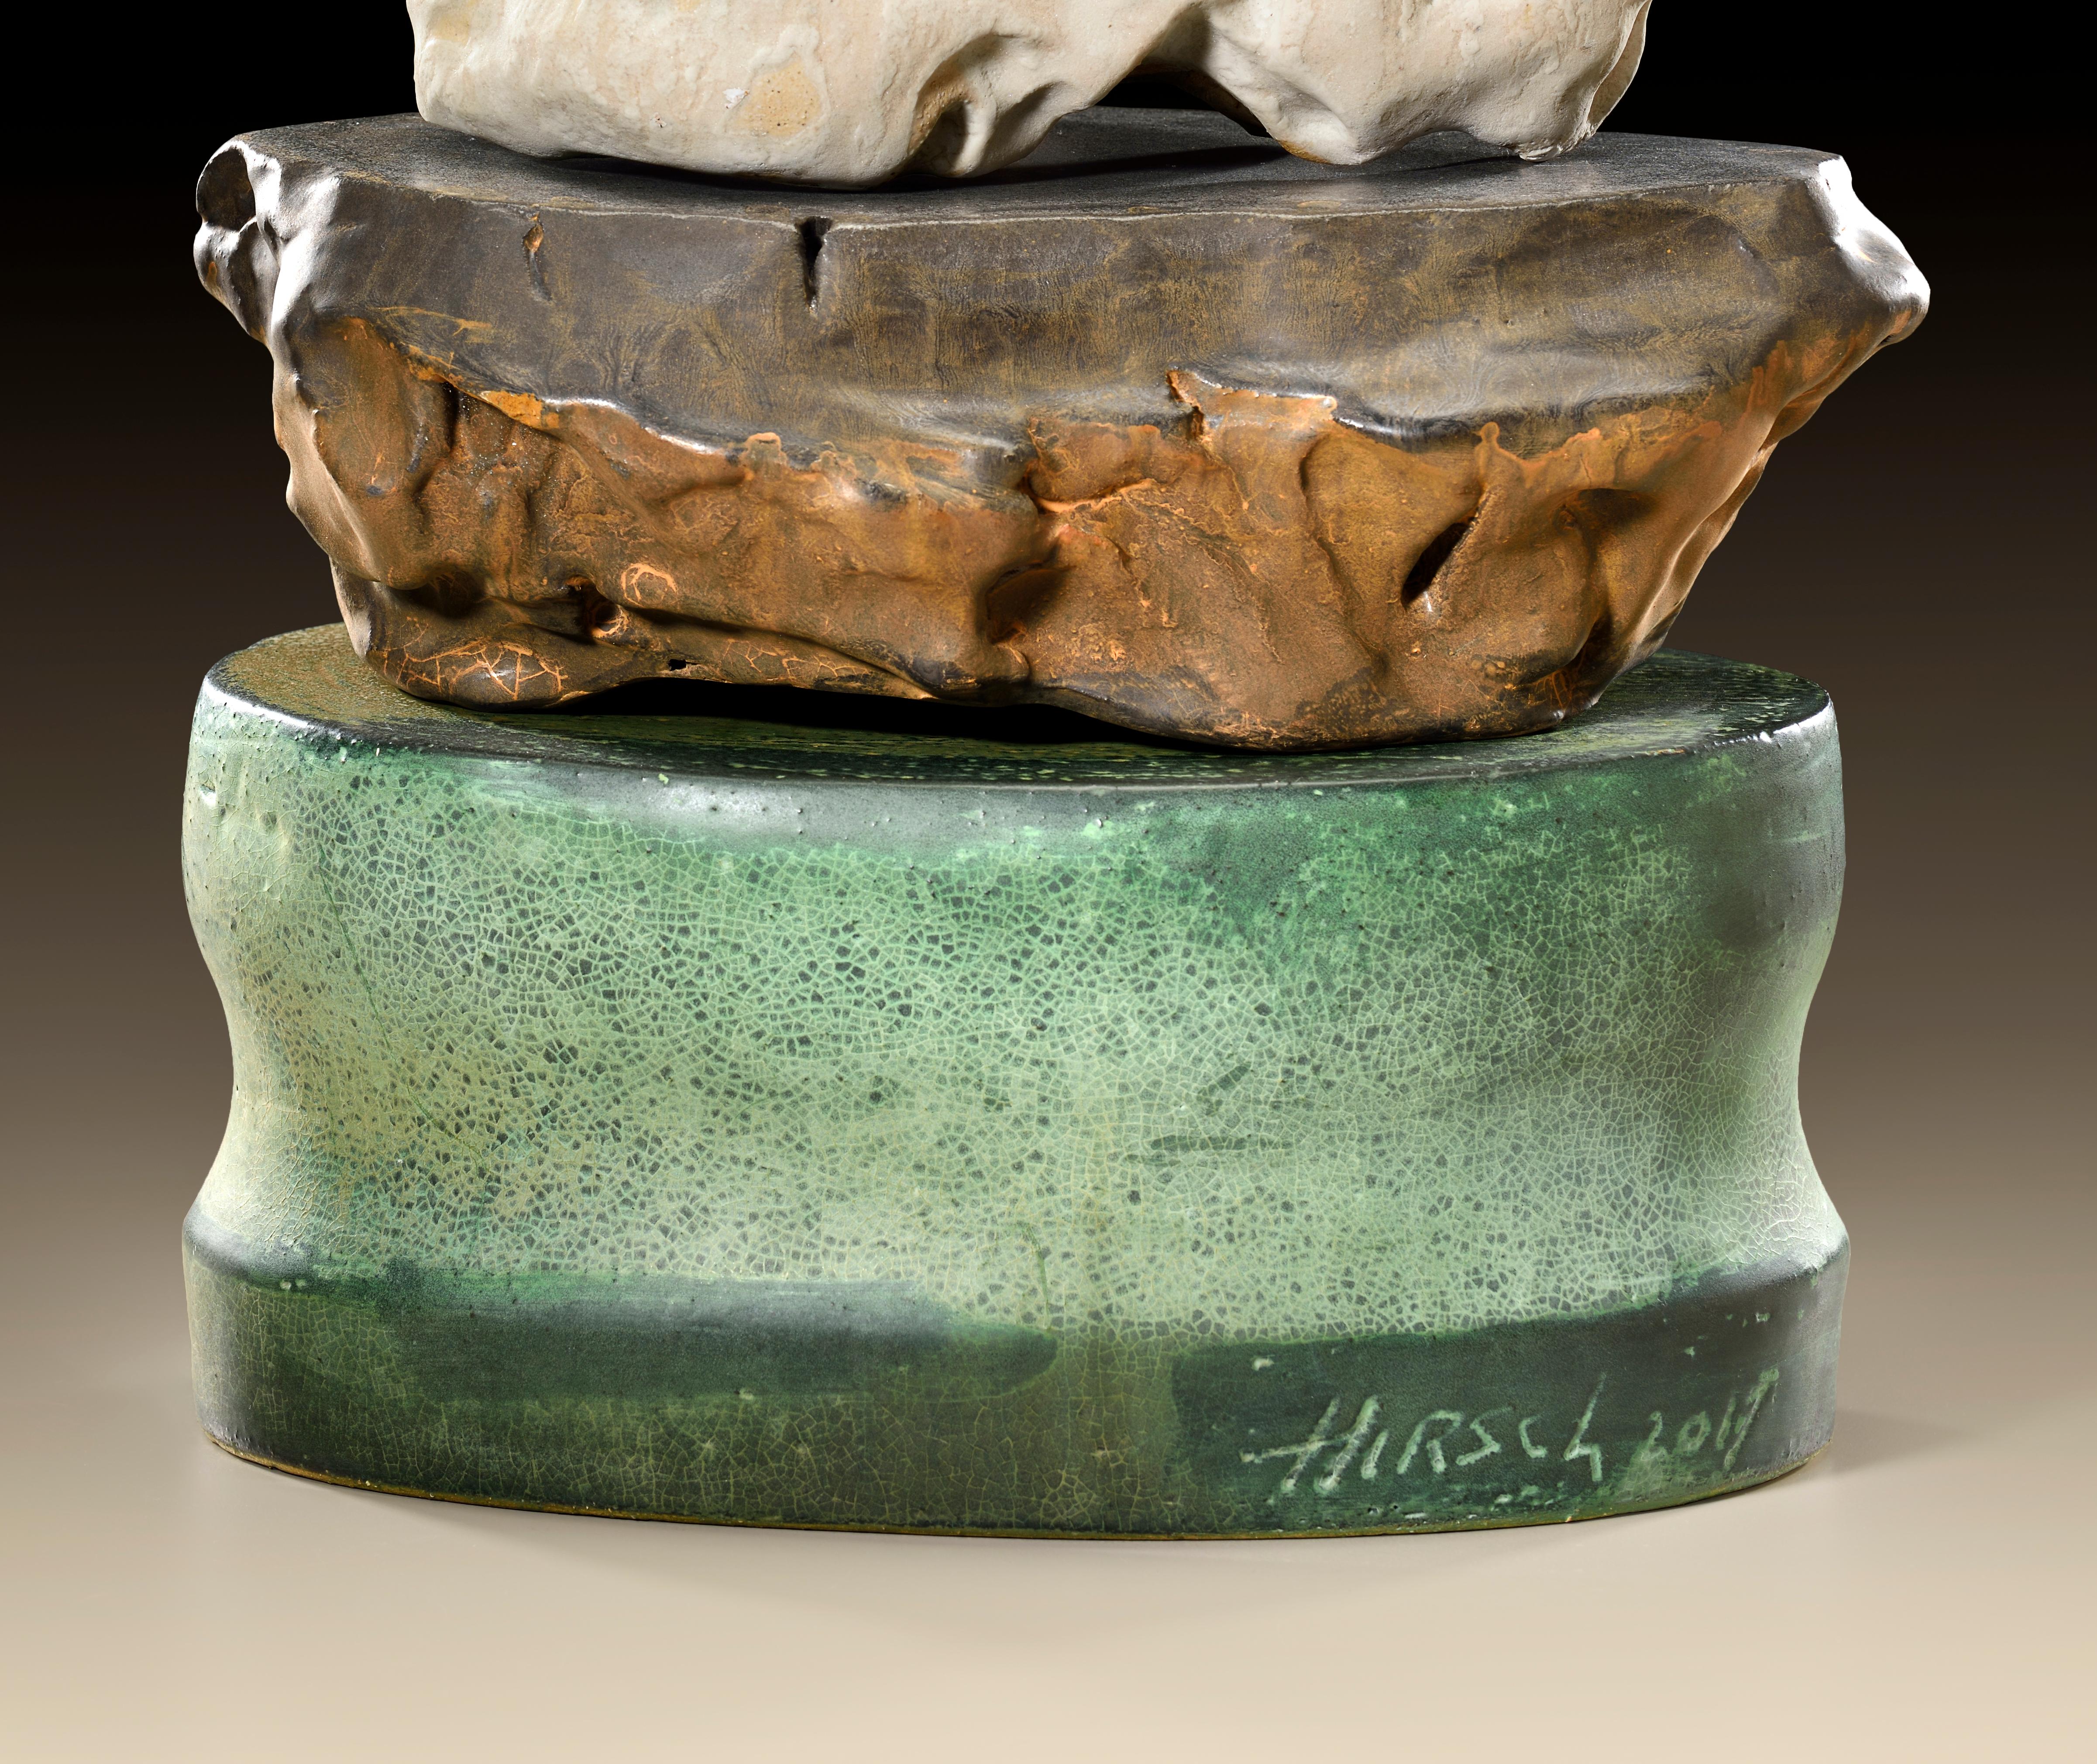 Glazed Richard Hirsch Ceramic Scholar Rock Cup Sculpture #32, 2017 - 2018 For Sale